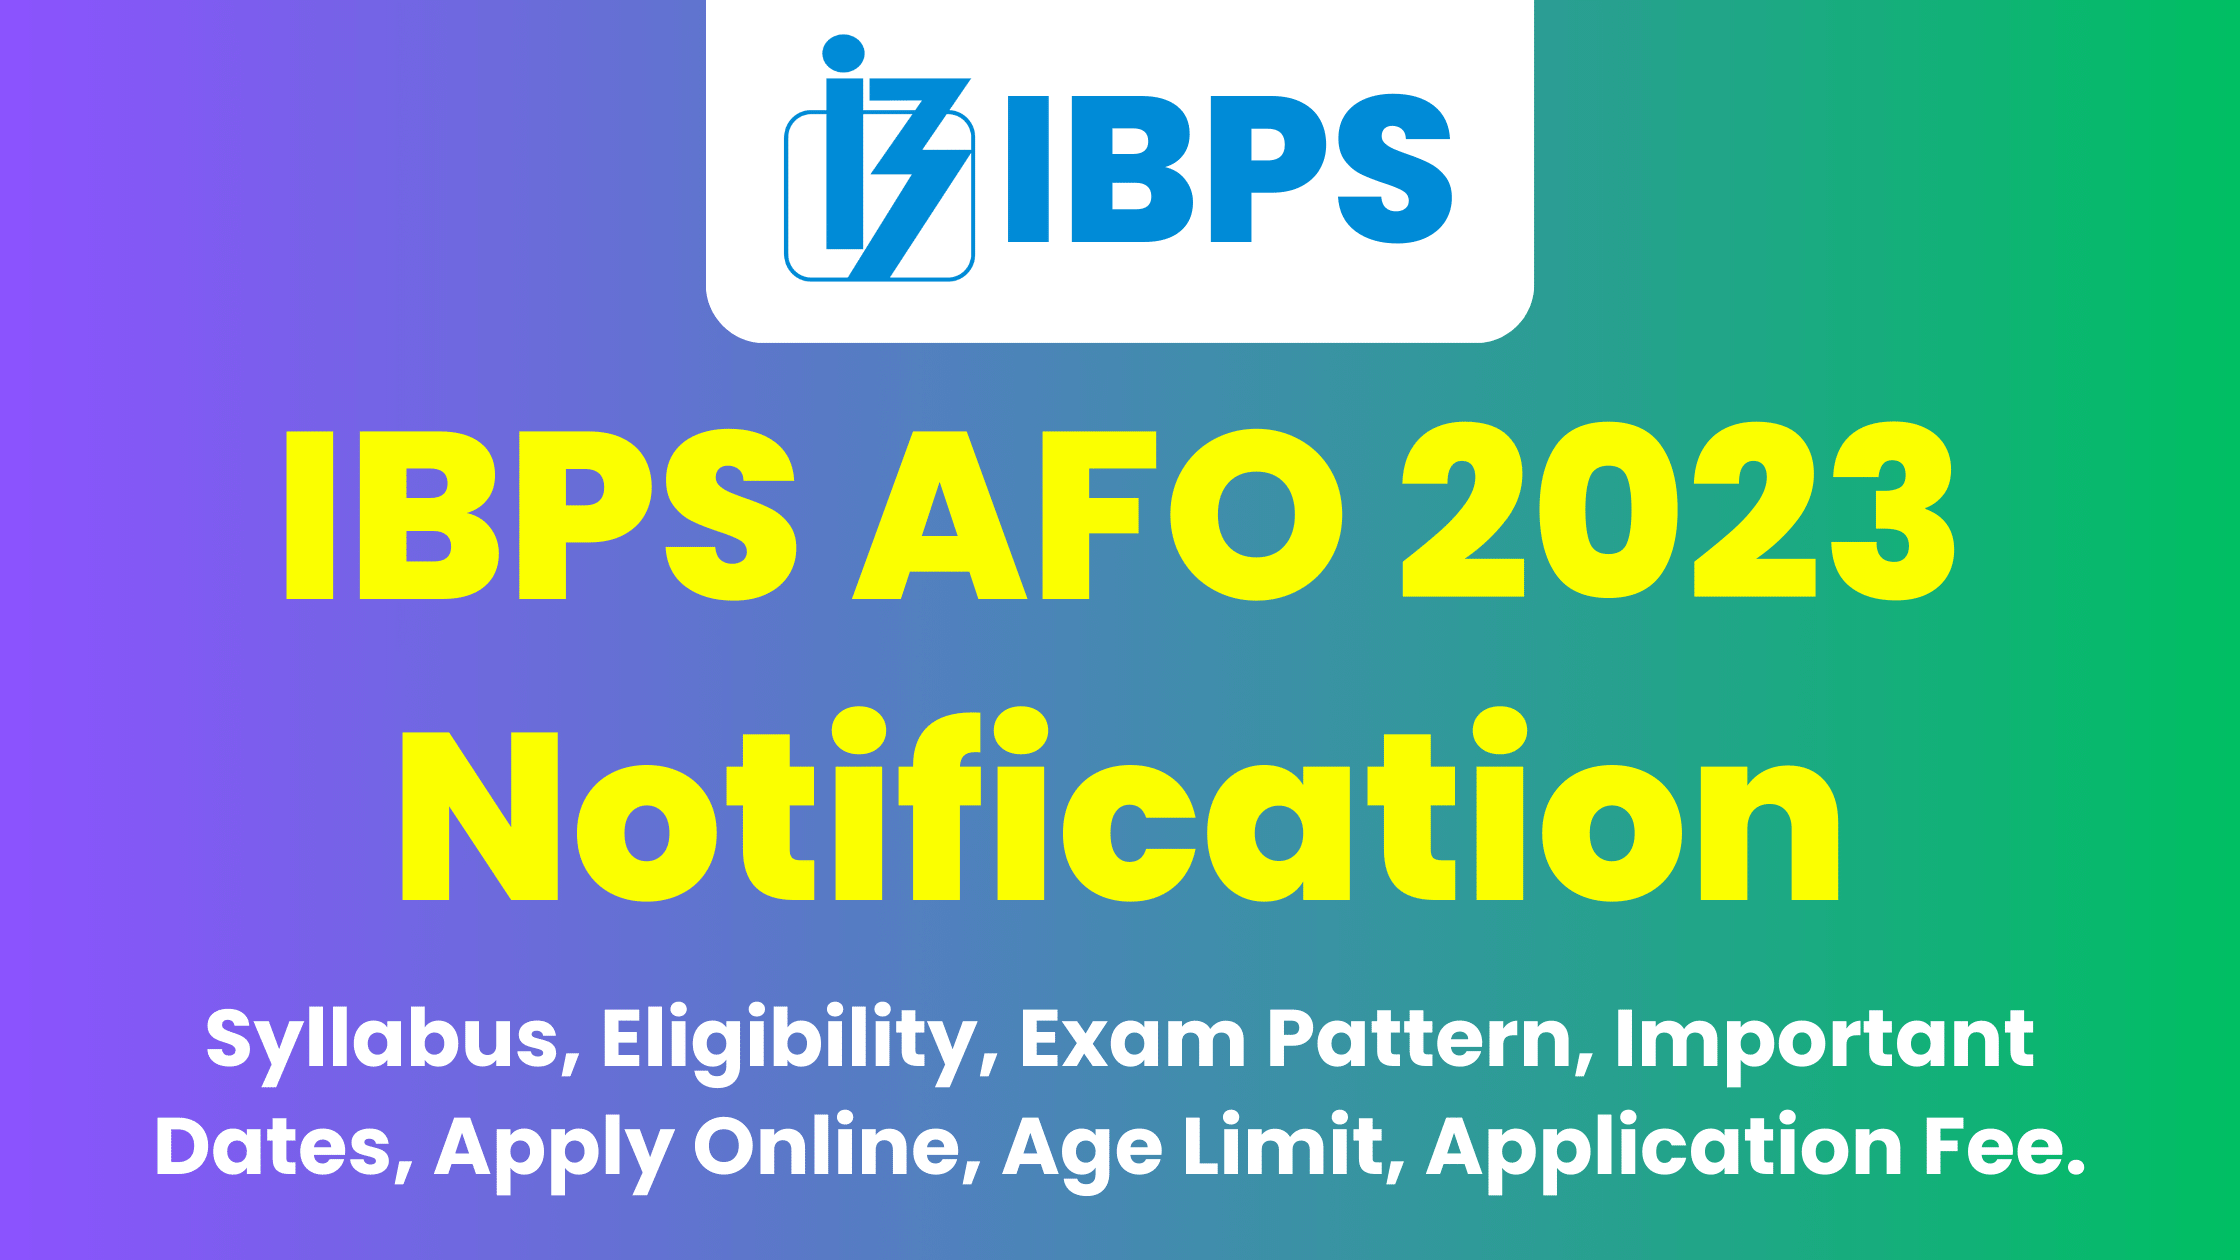 IBPS AFO 2023 Recruitment Notification for 500 Posts PDF, Syllabus, Eligibility, Pattern